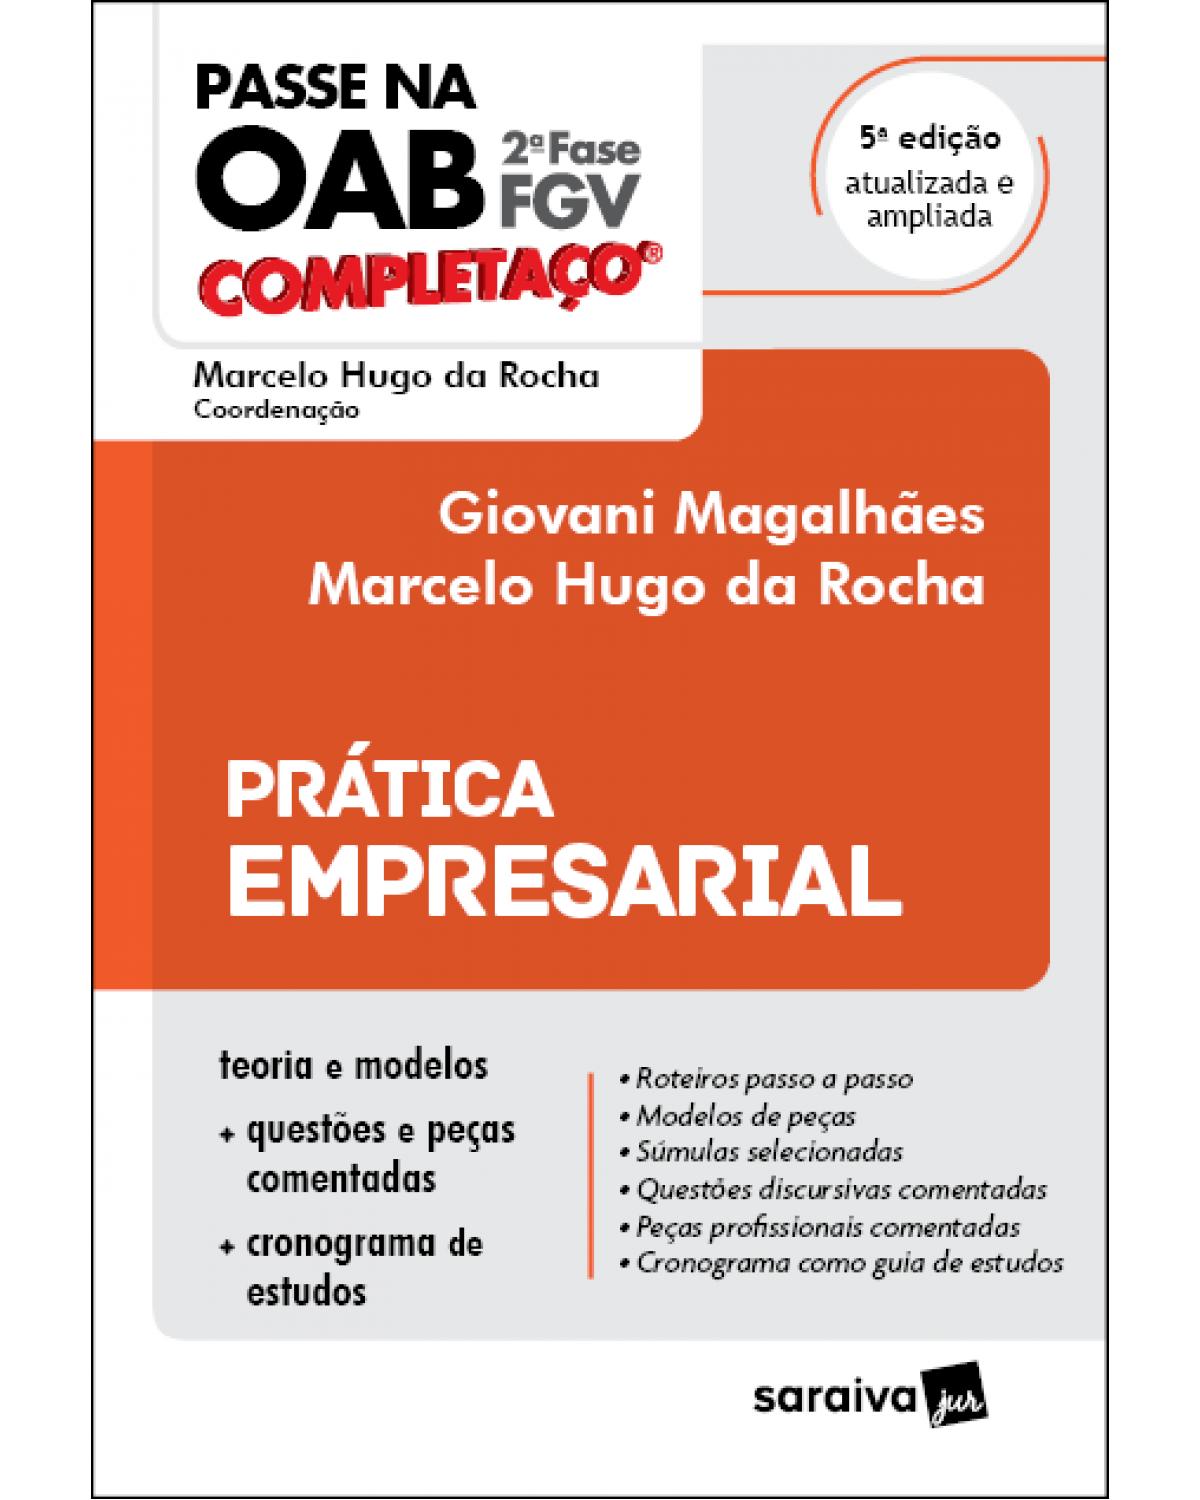 Passe na OAB 2ª fase FGV - Prática empresarial - 5ª Edição | 2021